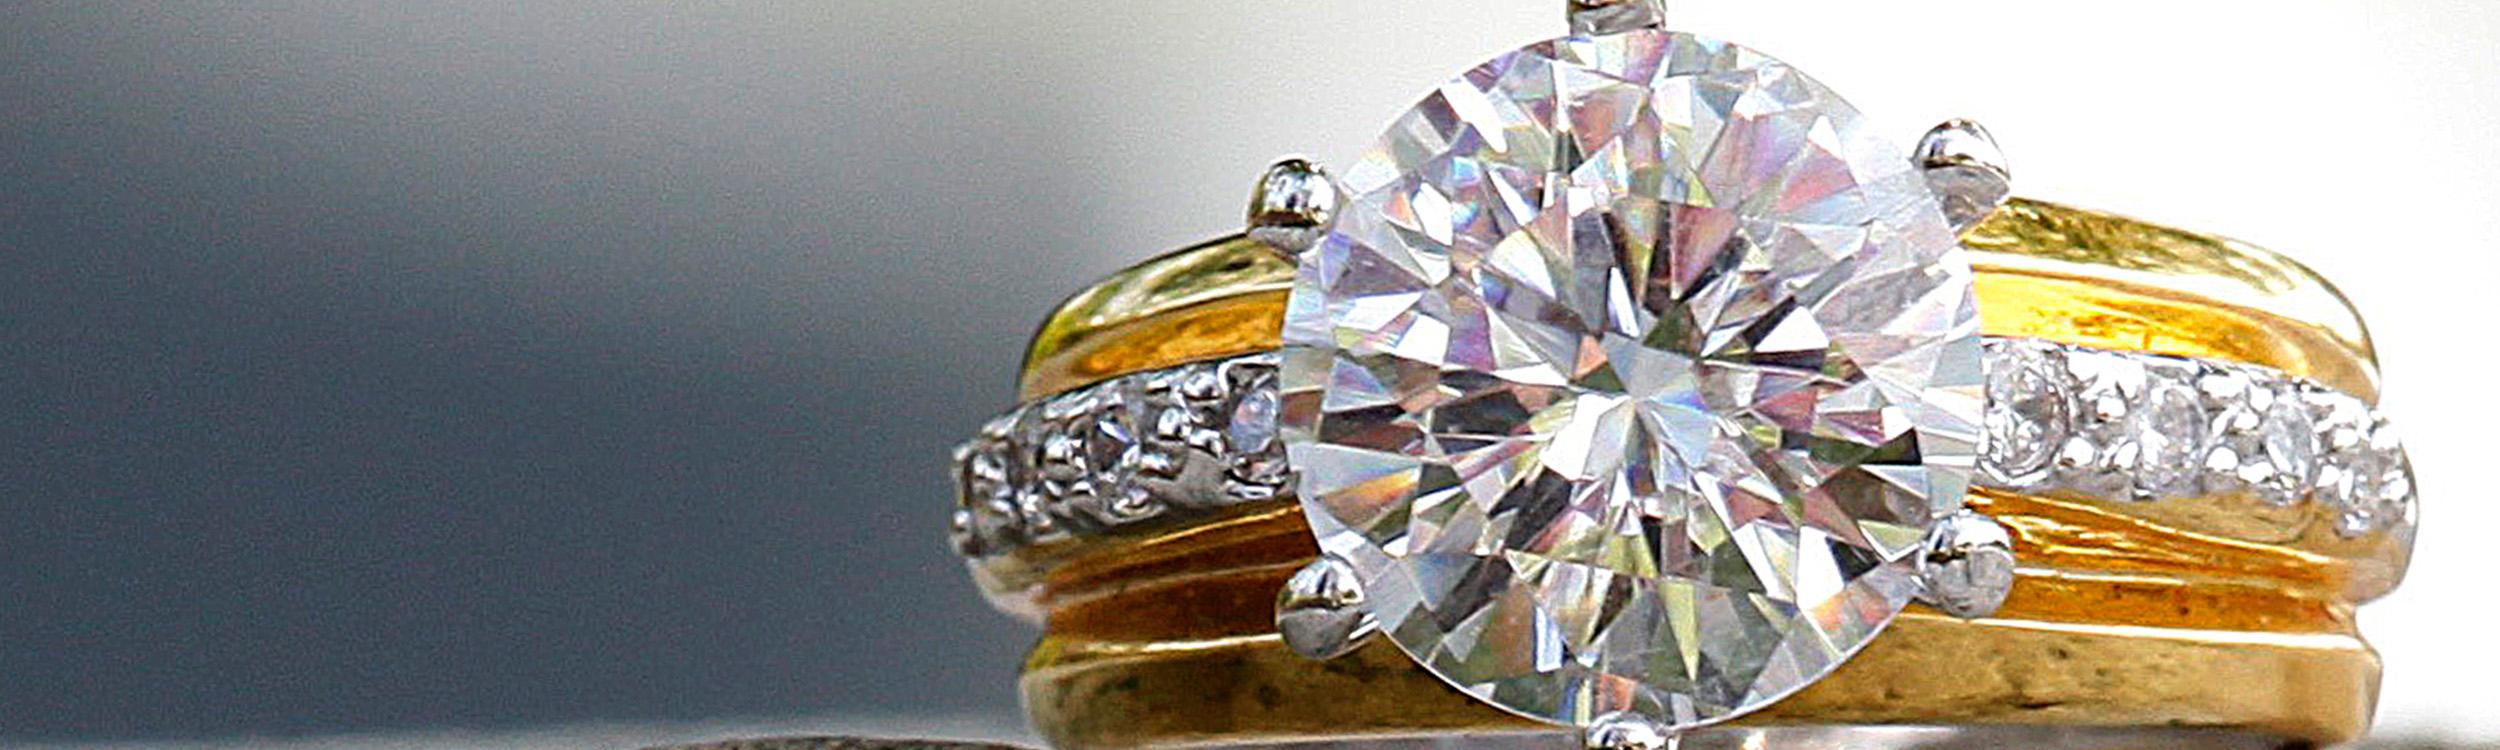 closeup of a diamond ring